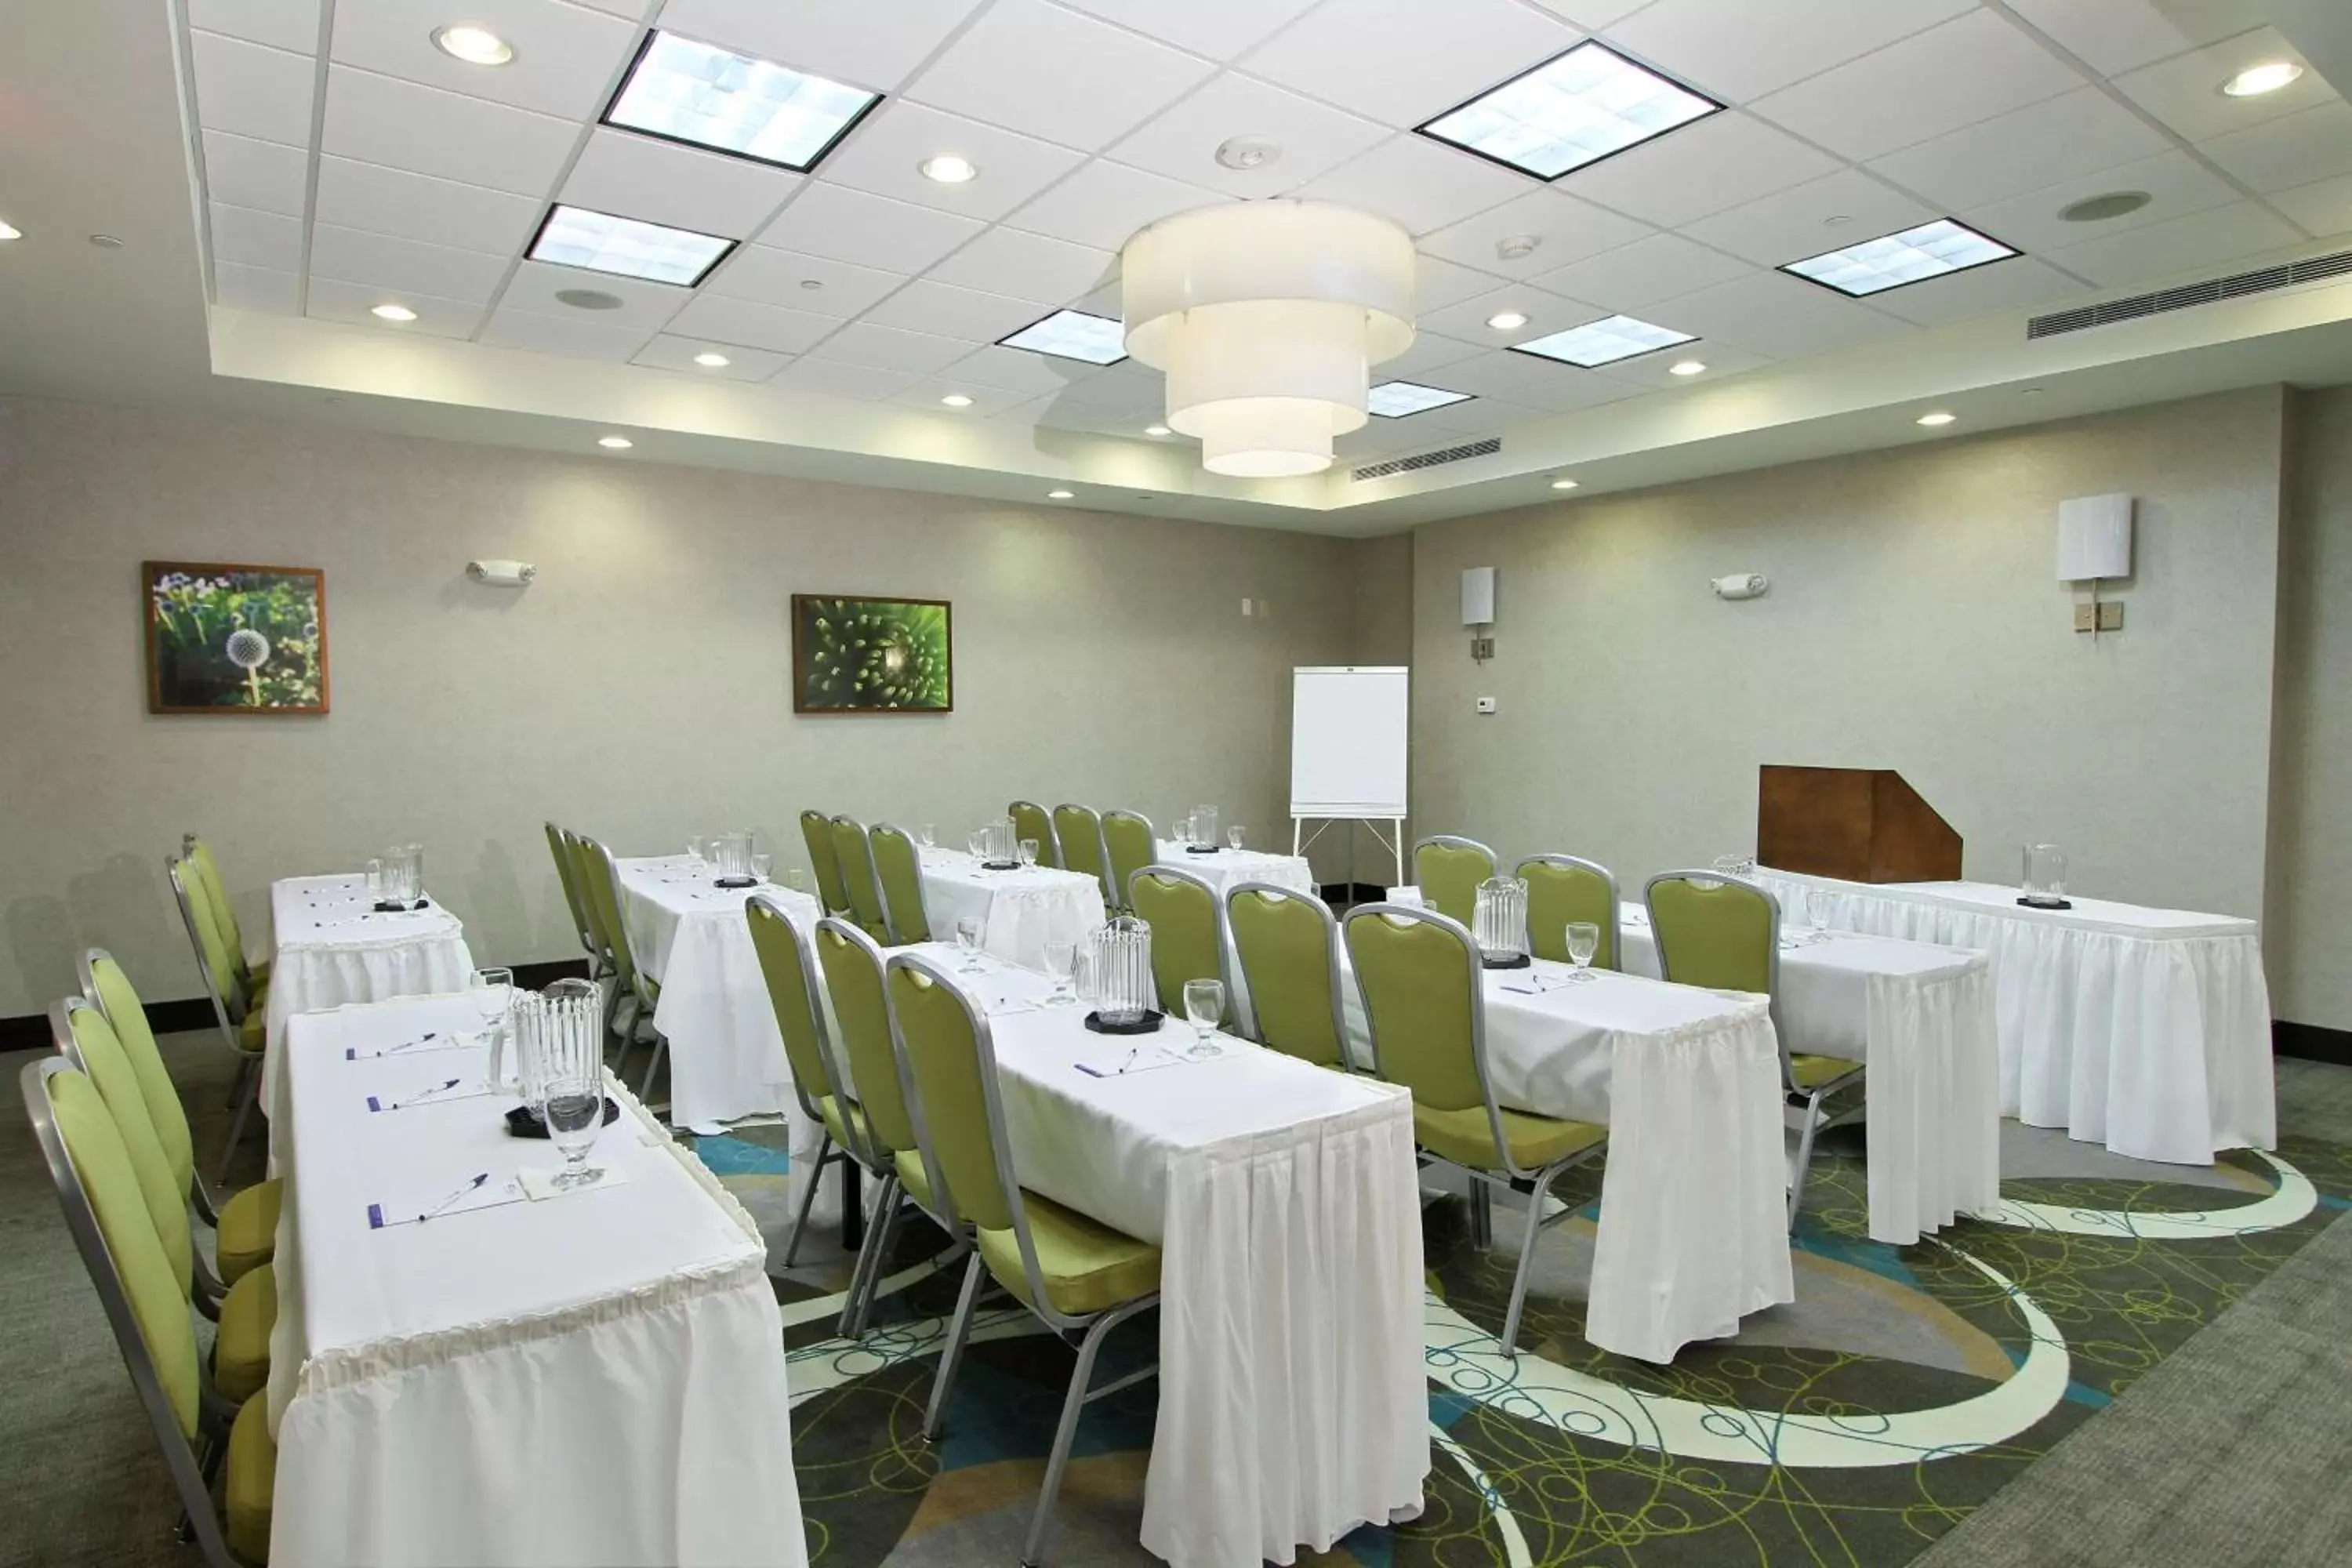 Meeting/conference room in Hilton Garden Inn Covington/Mandeville